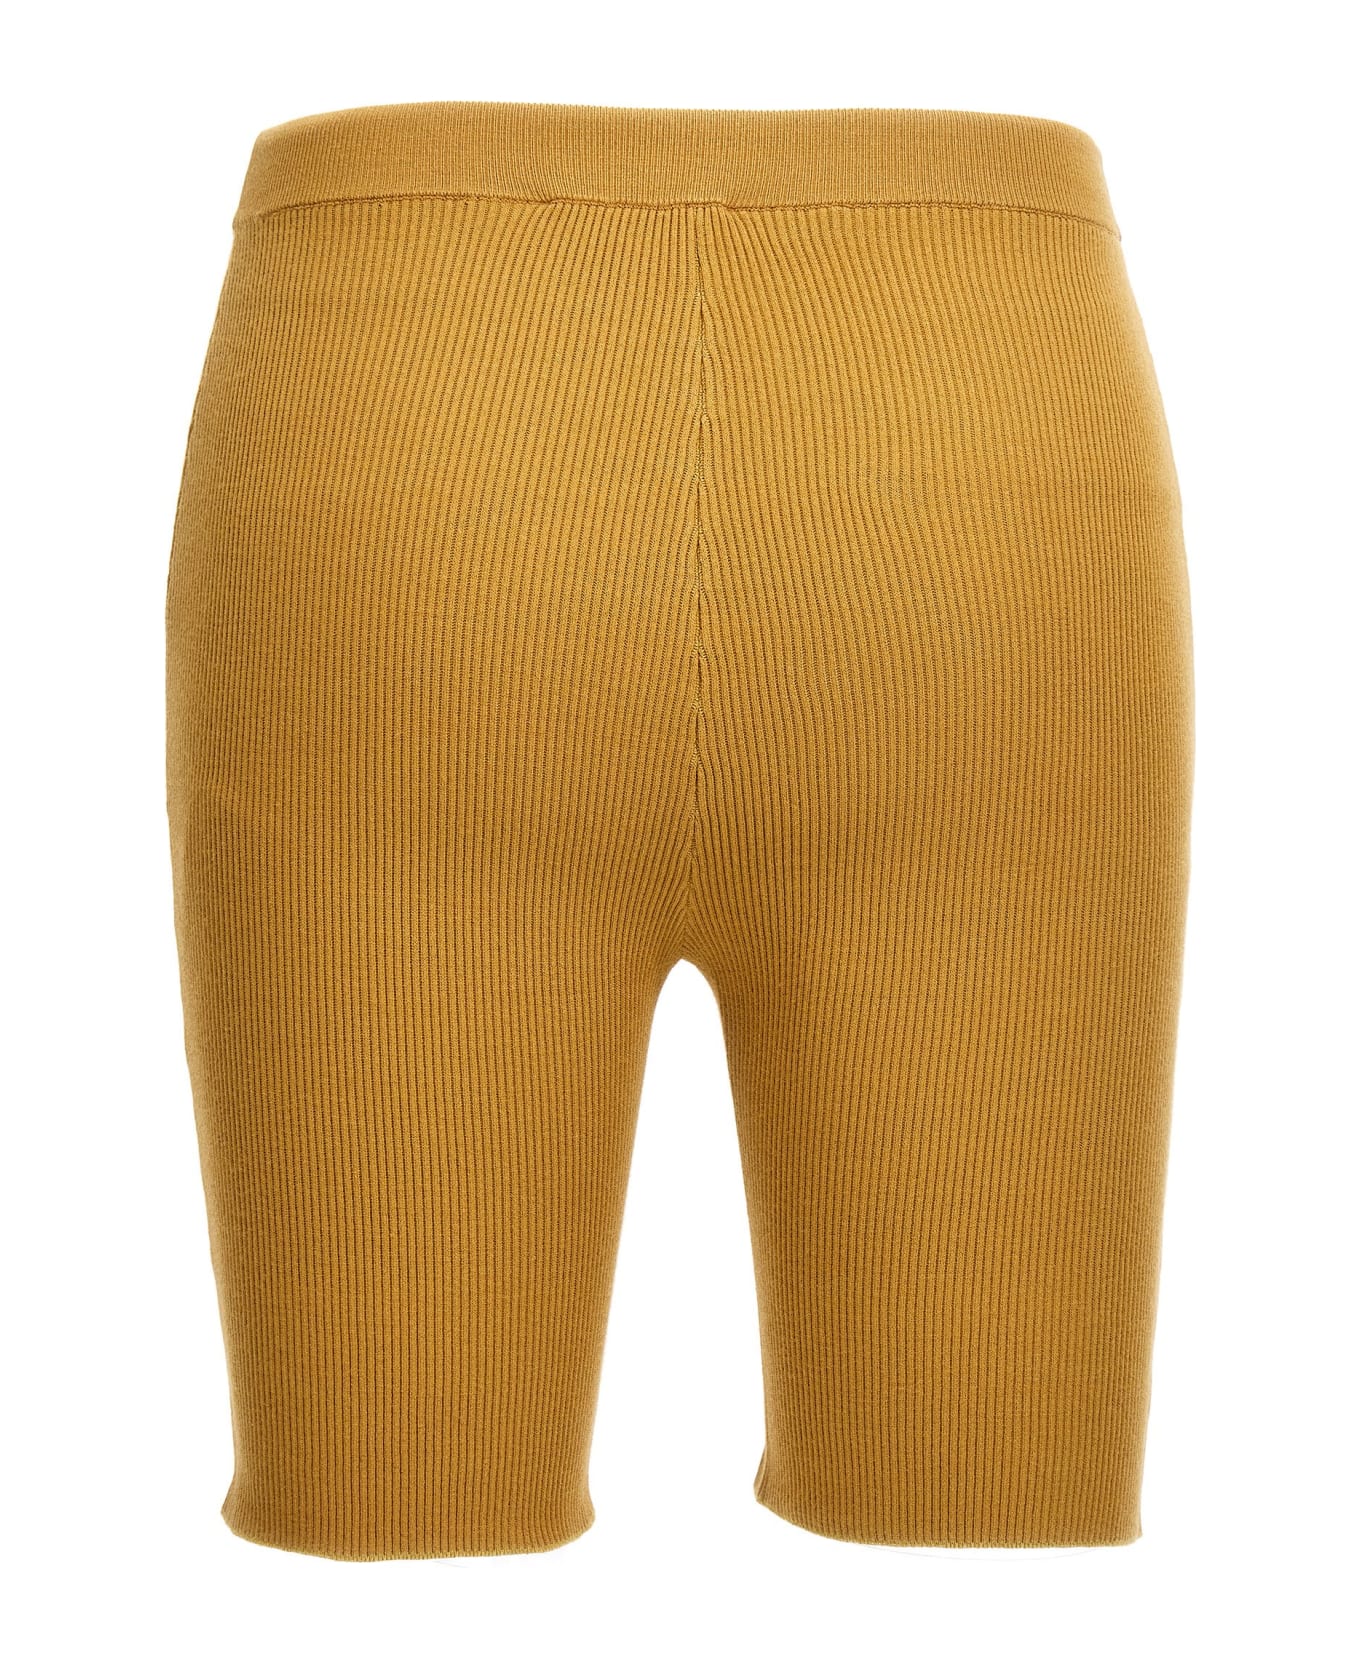 Loewe Paula's Ibiza Capsule Shorts - Beige ショートパンツ